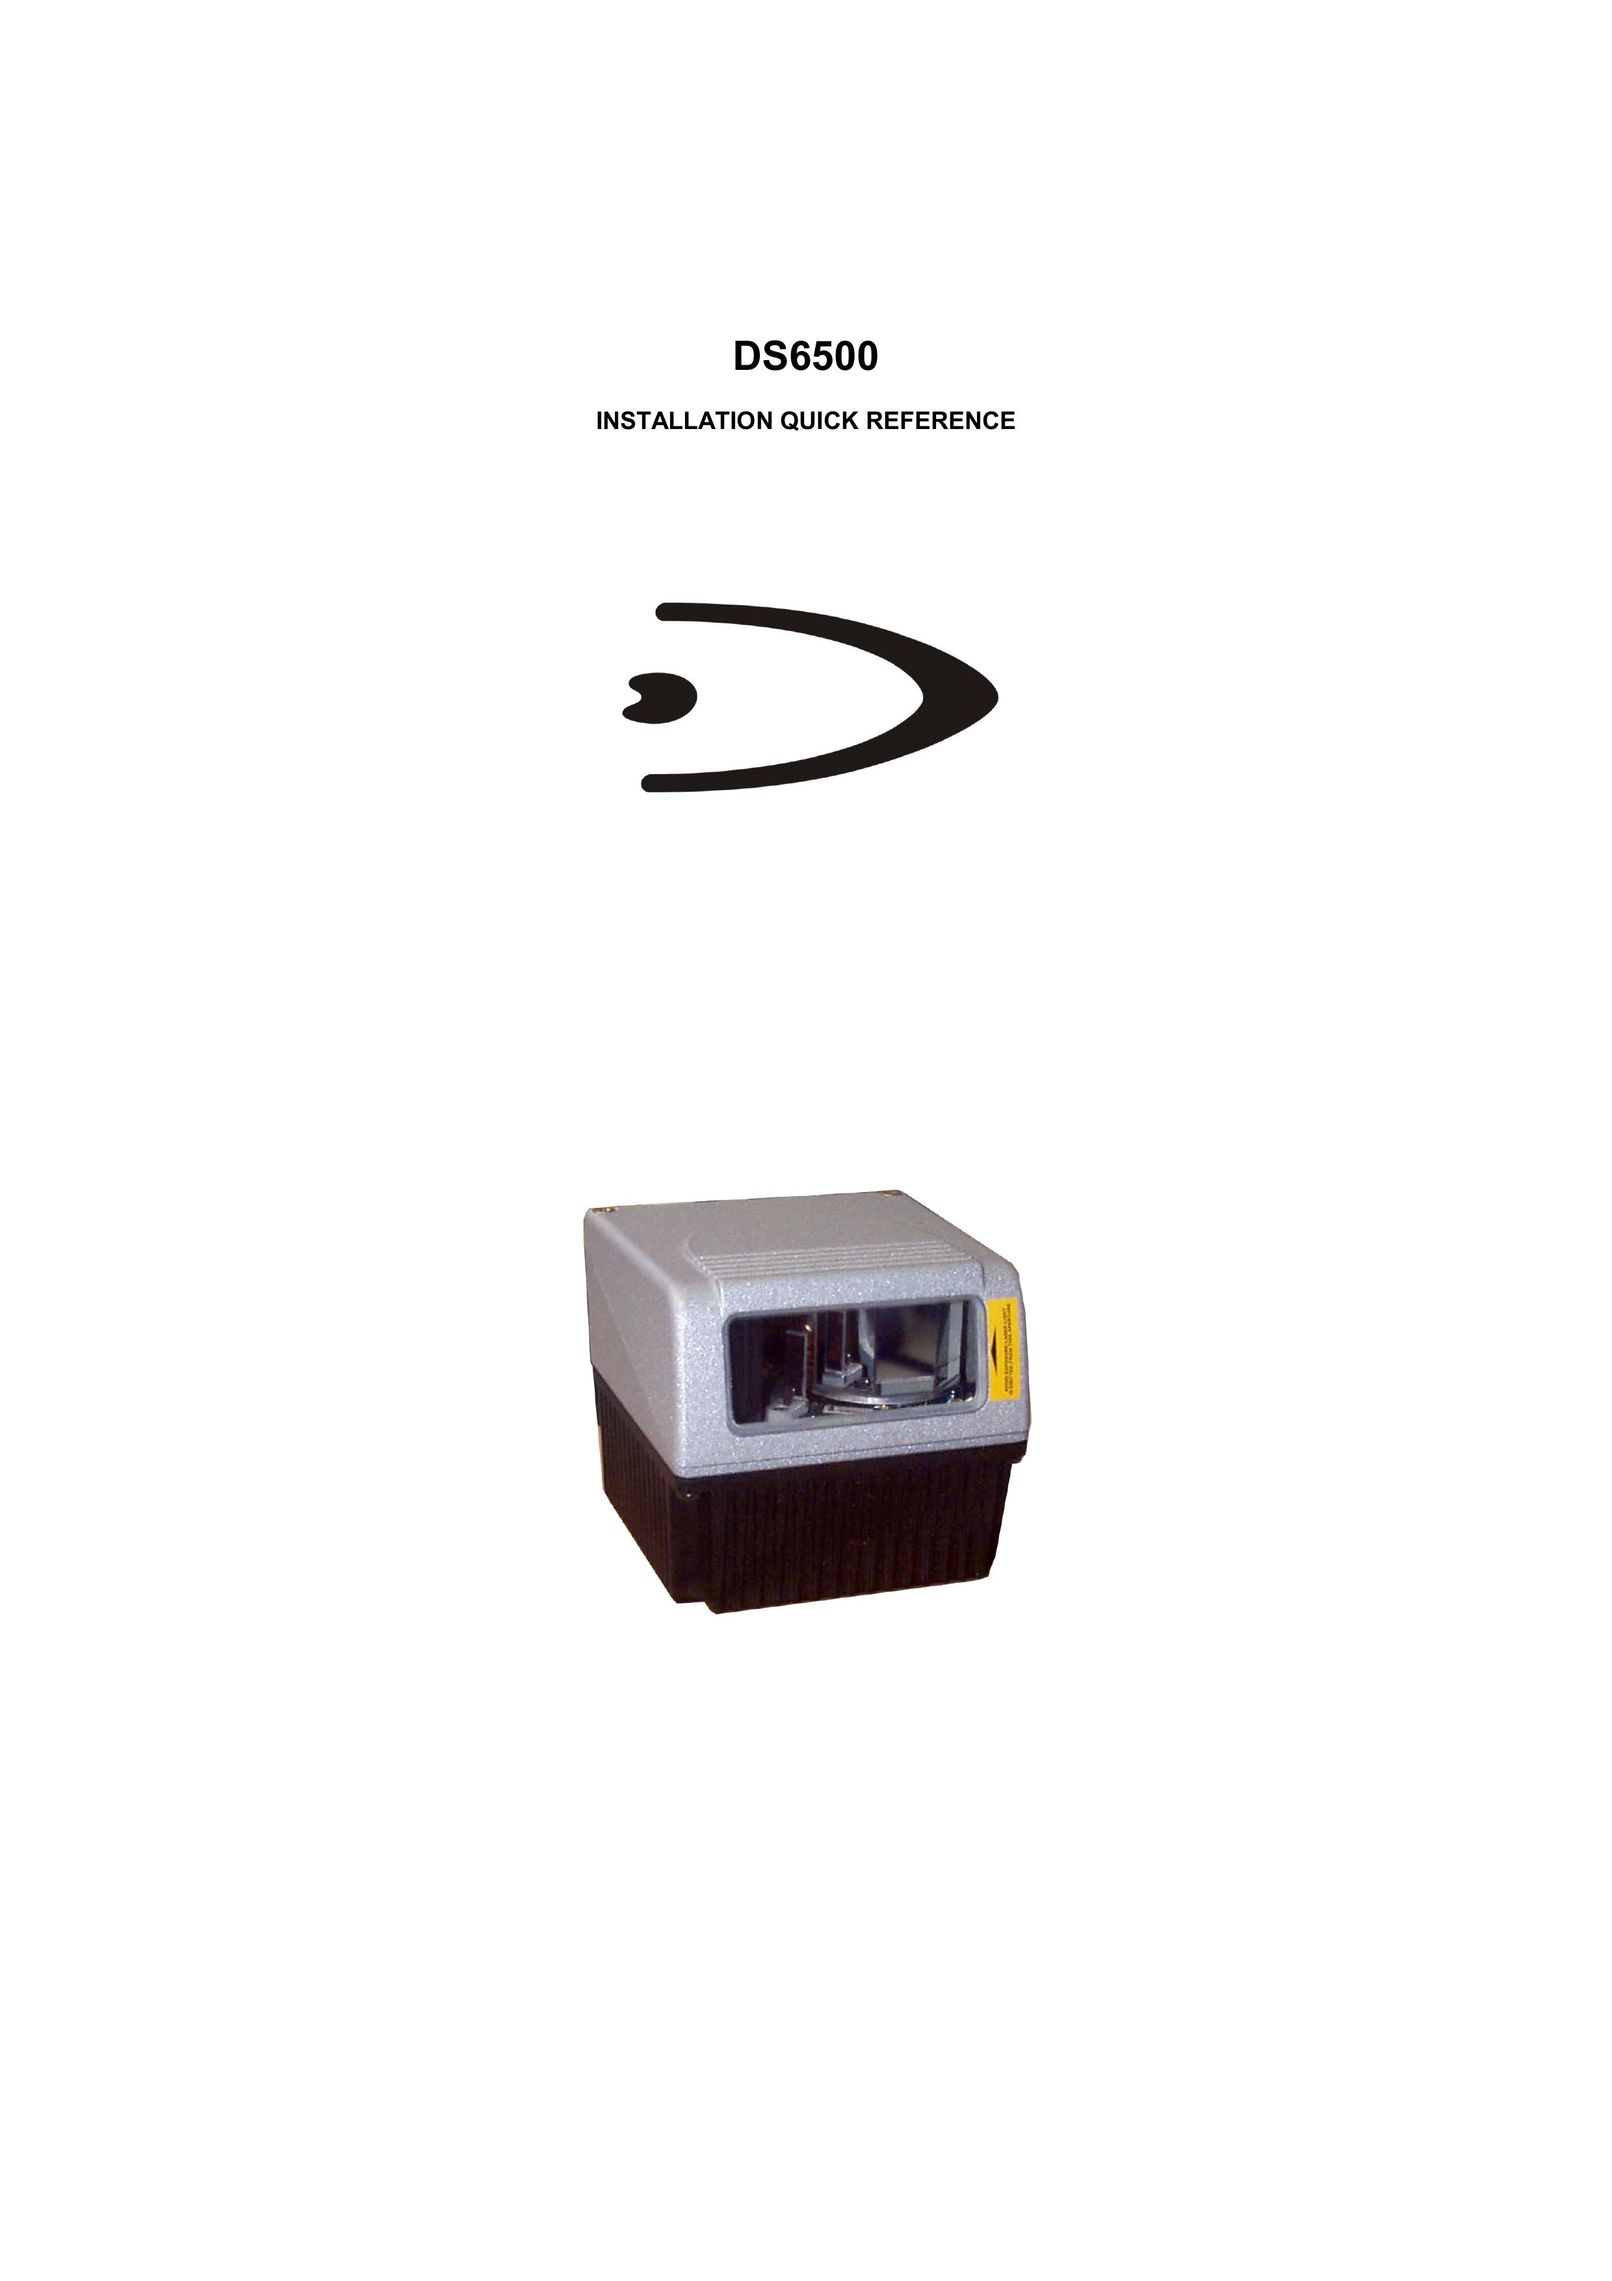 Datalogic Scanning DS6500-105-0XX Scanner User Manual